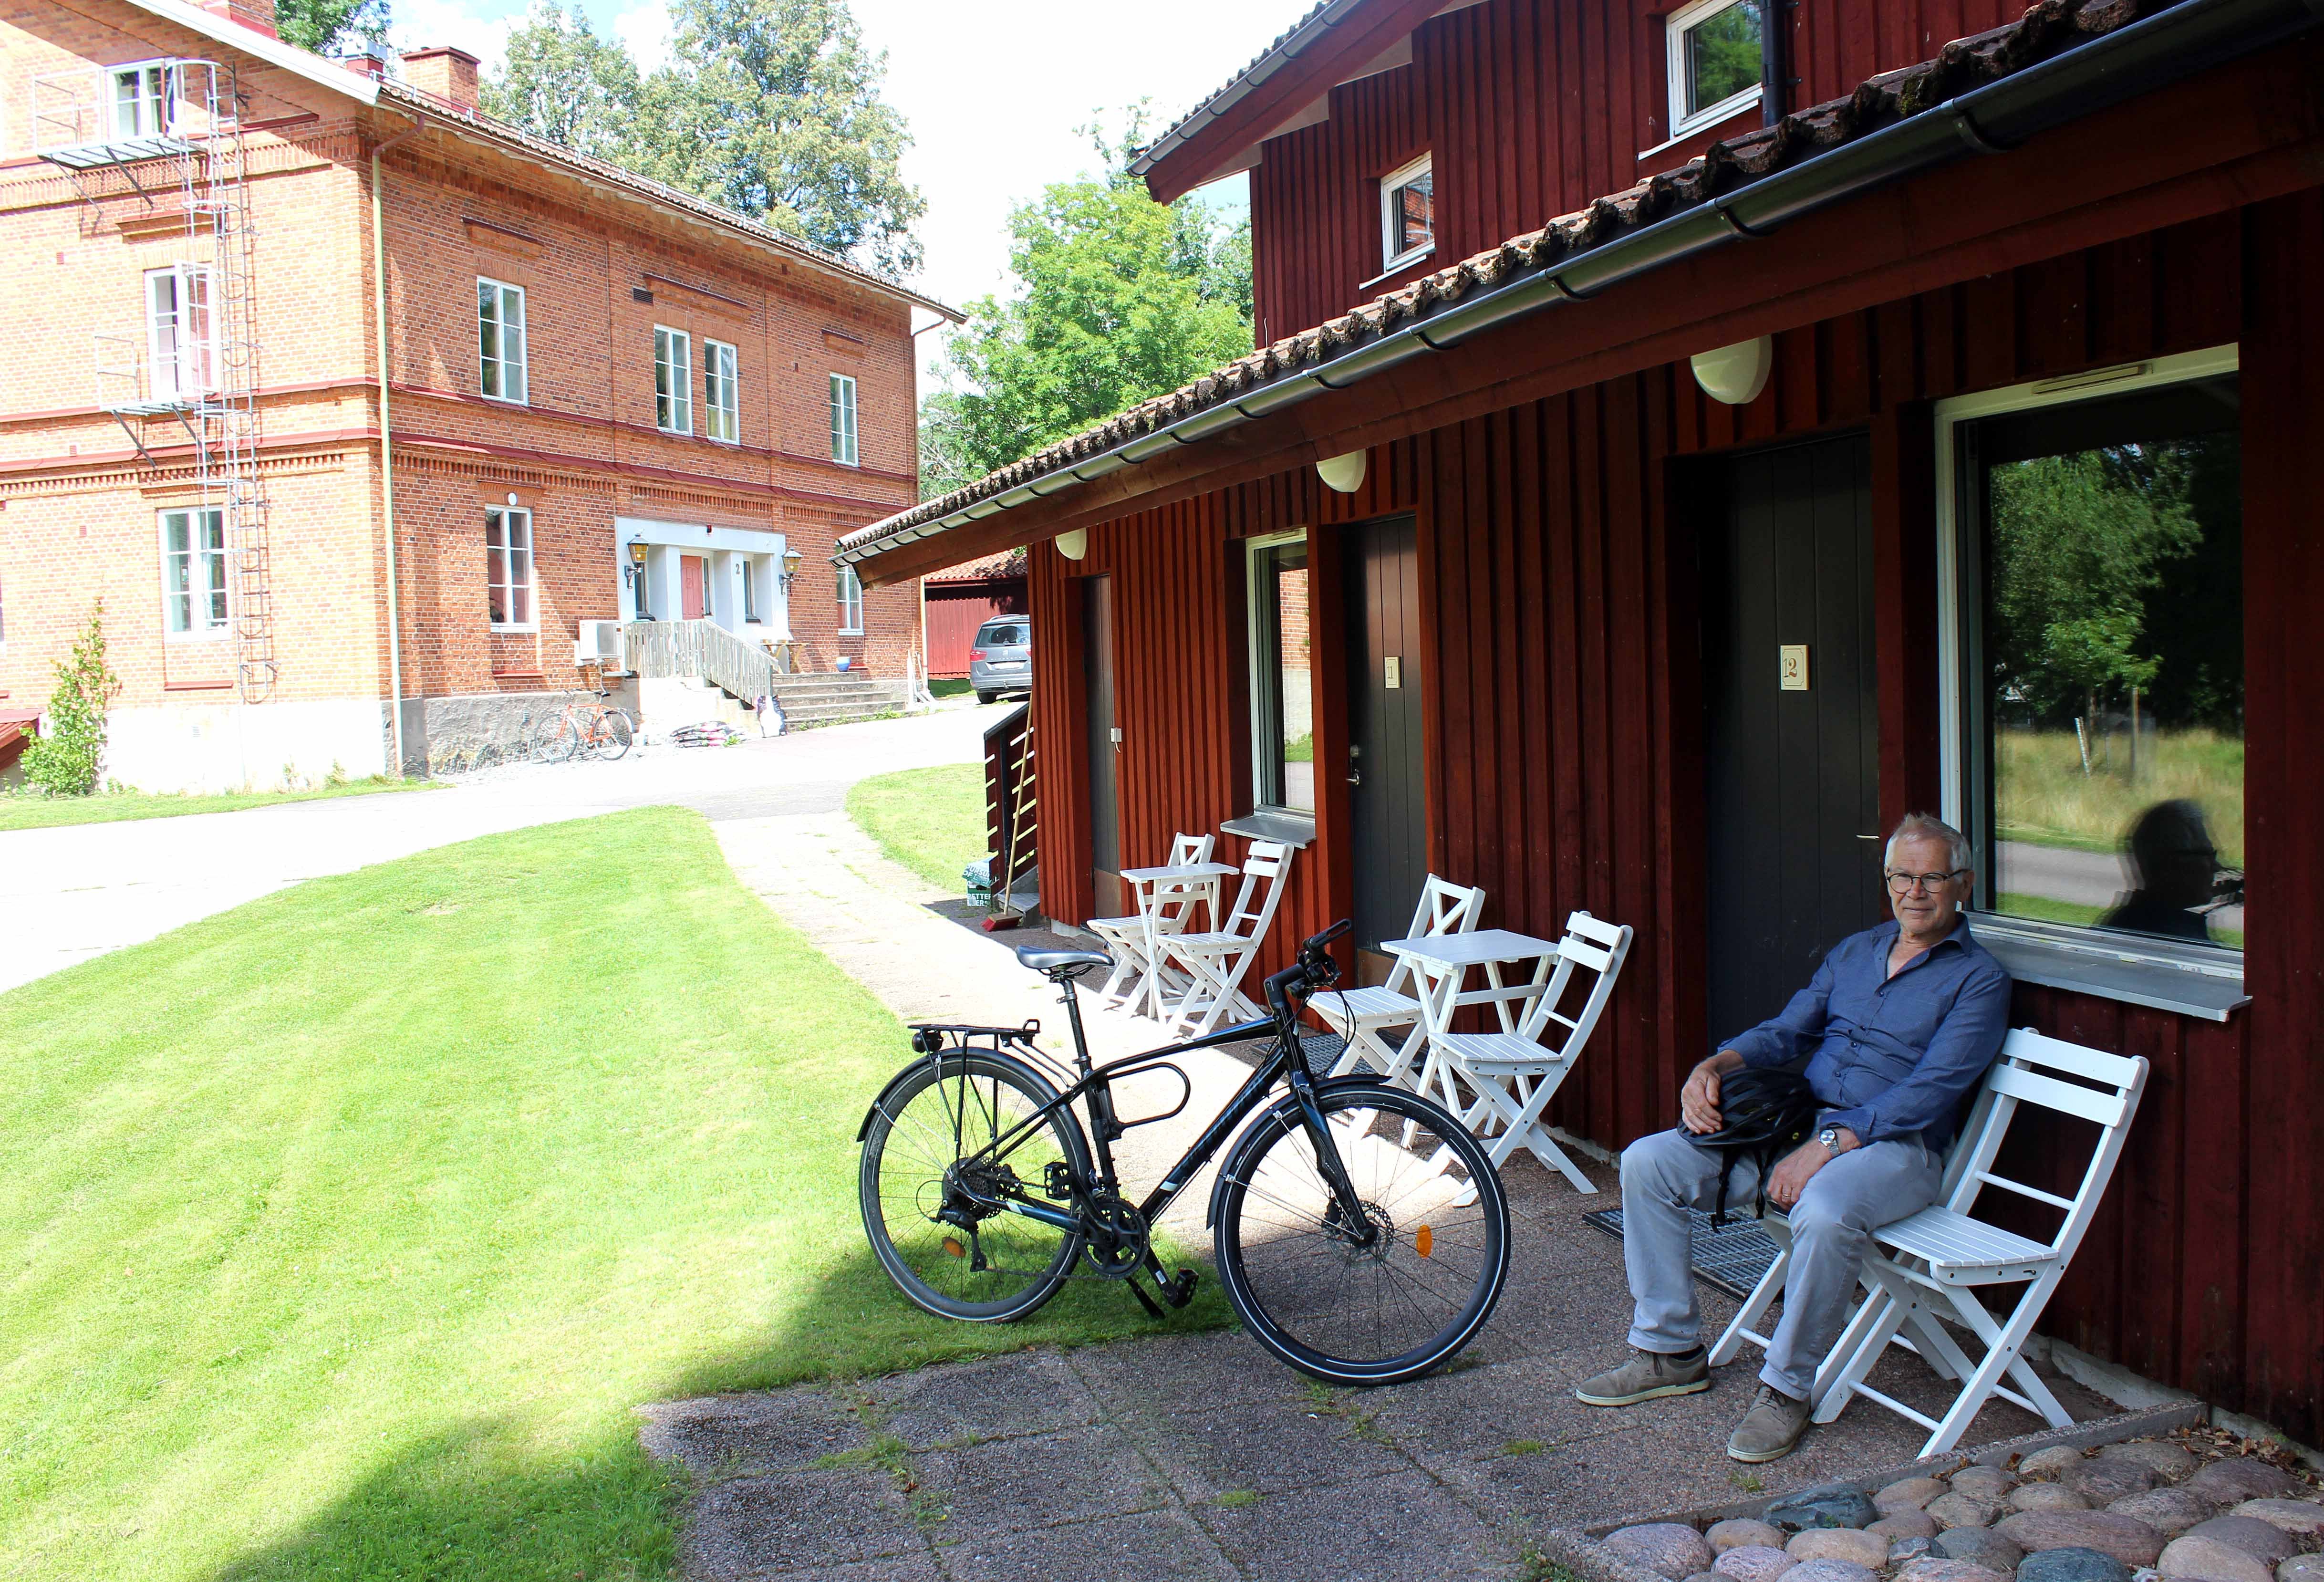 Borgvik, a well-preserved historic former industrial village on Lake Vänern